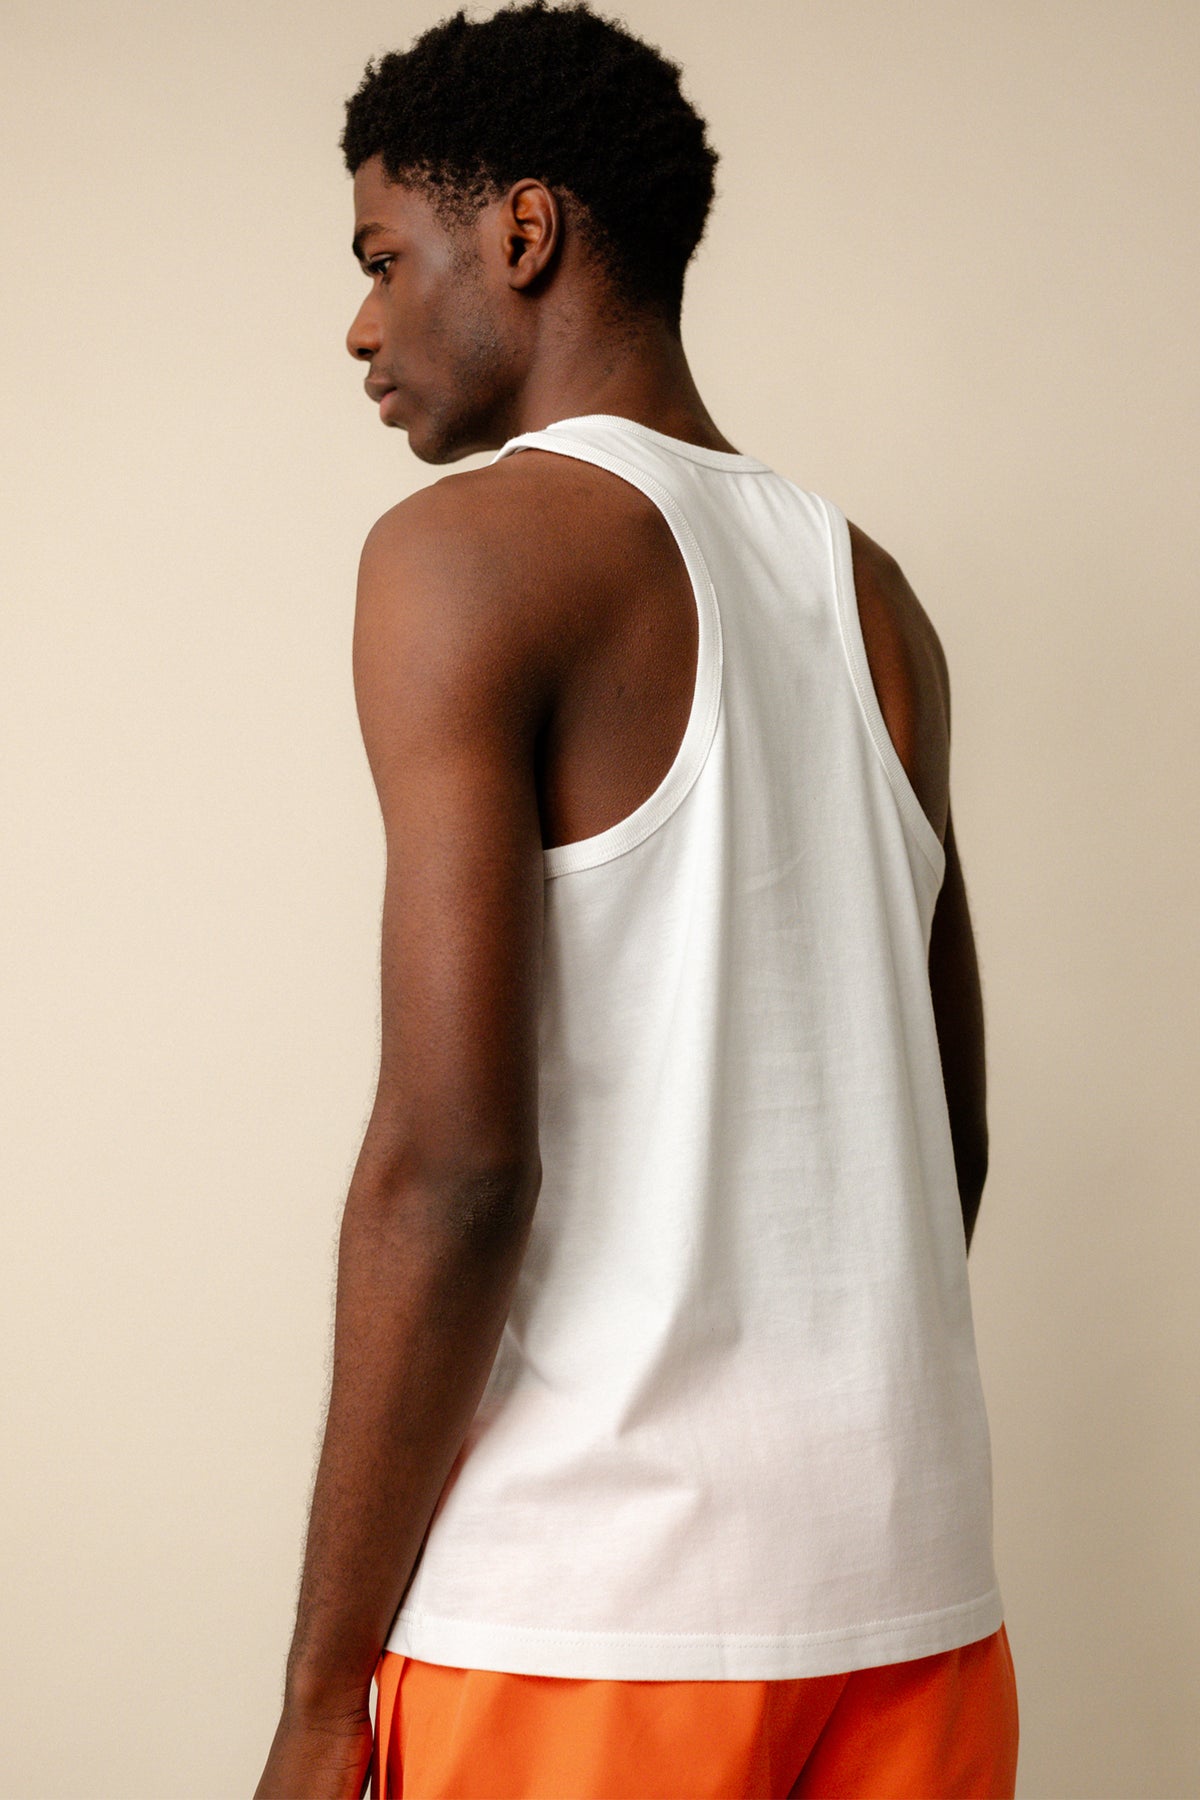 
            Back of black male wearing racer back vest plastic free in white